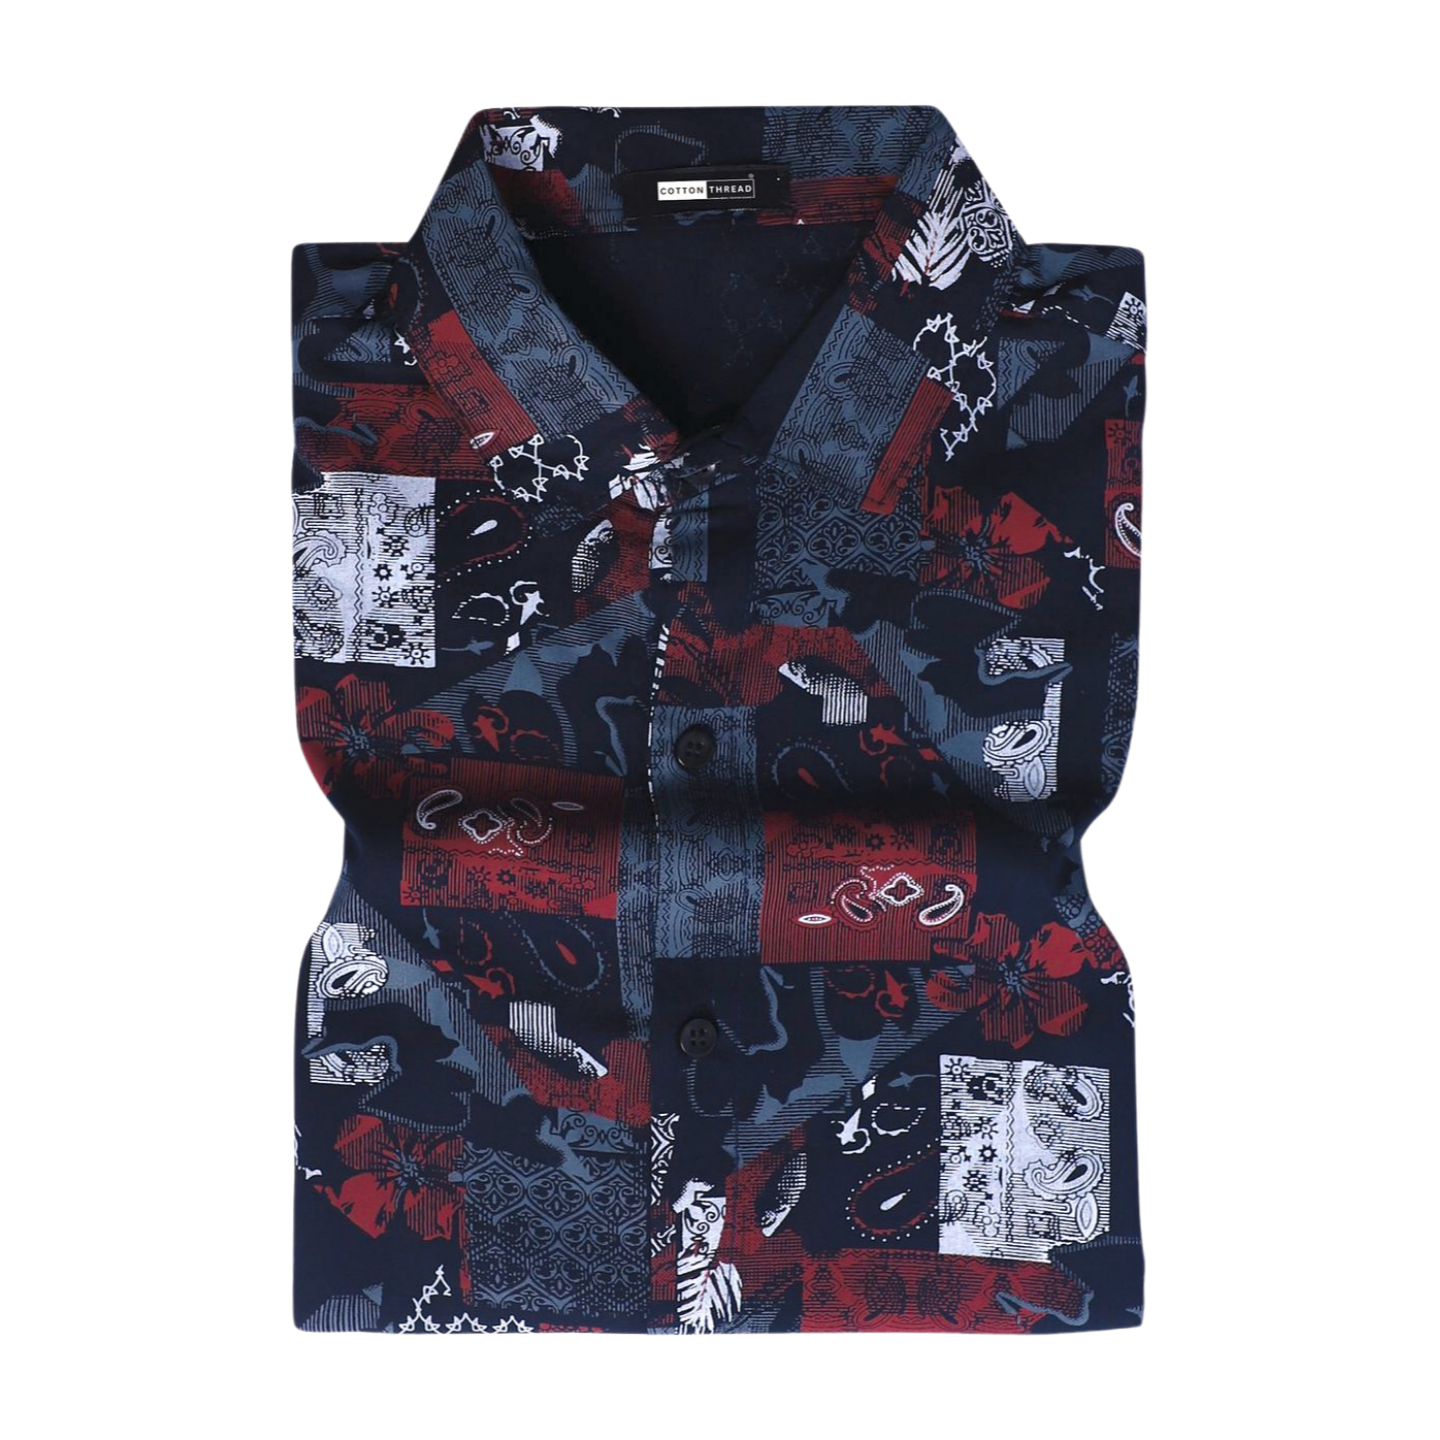 Men's Premium Cotton Half Sleeve Multicolored Printed Shirt By Cotton Thread (PRT-079)